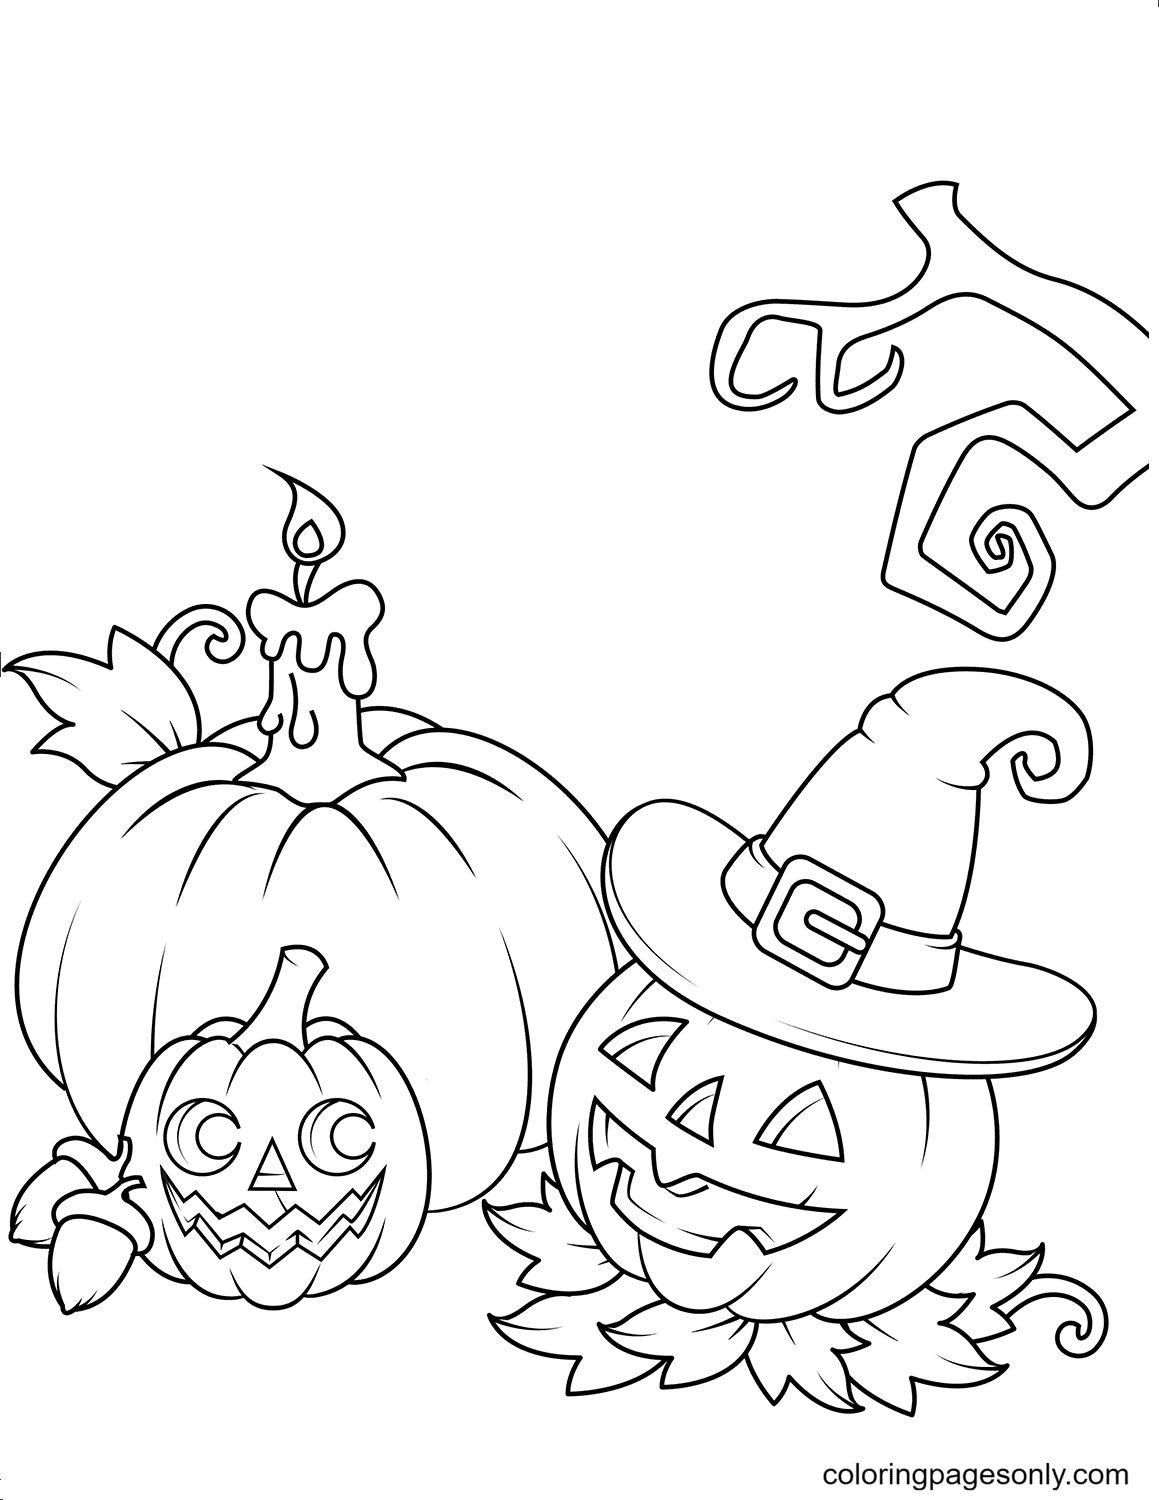 Jack O’Lanterns and Pumpkin Coloring Page